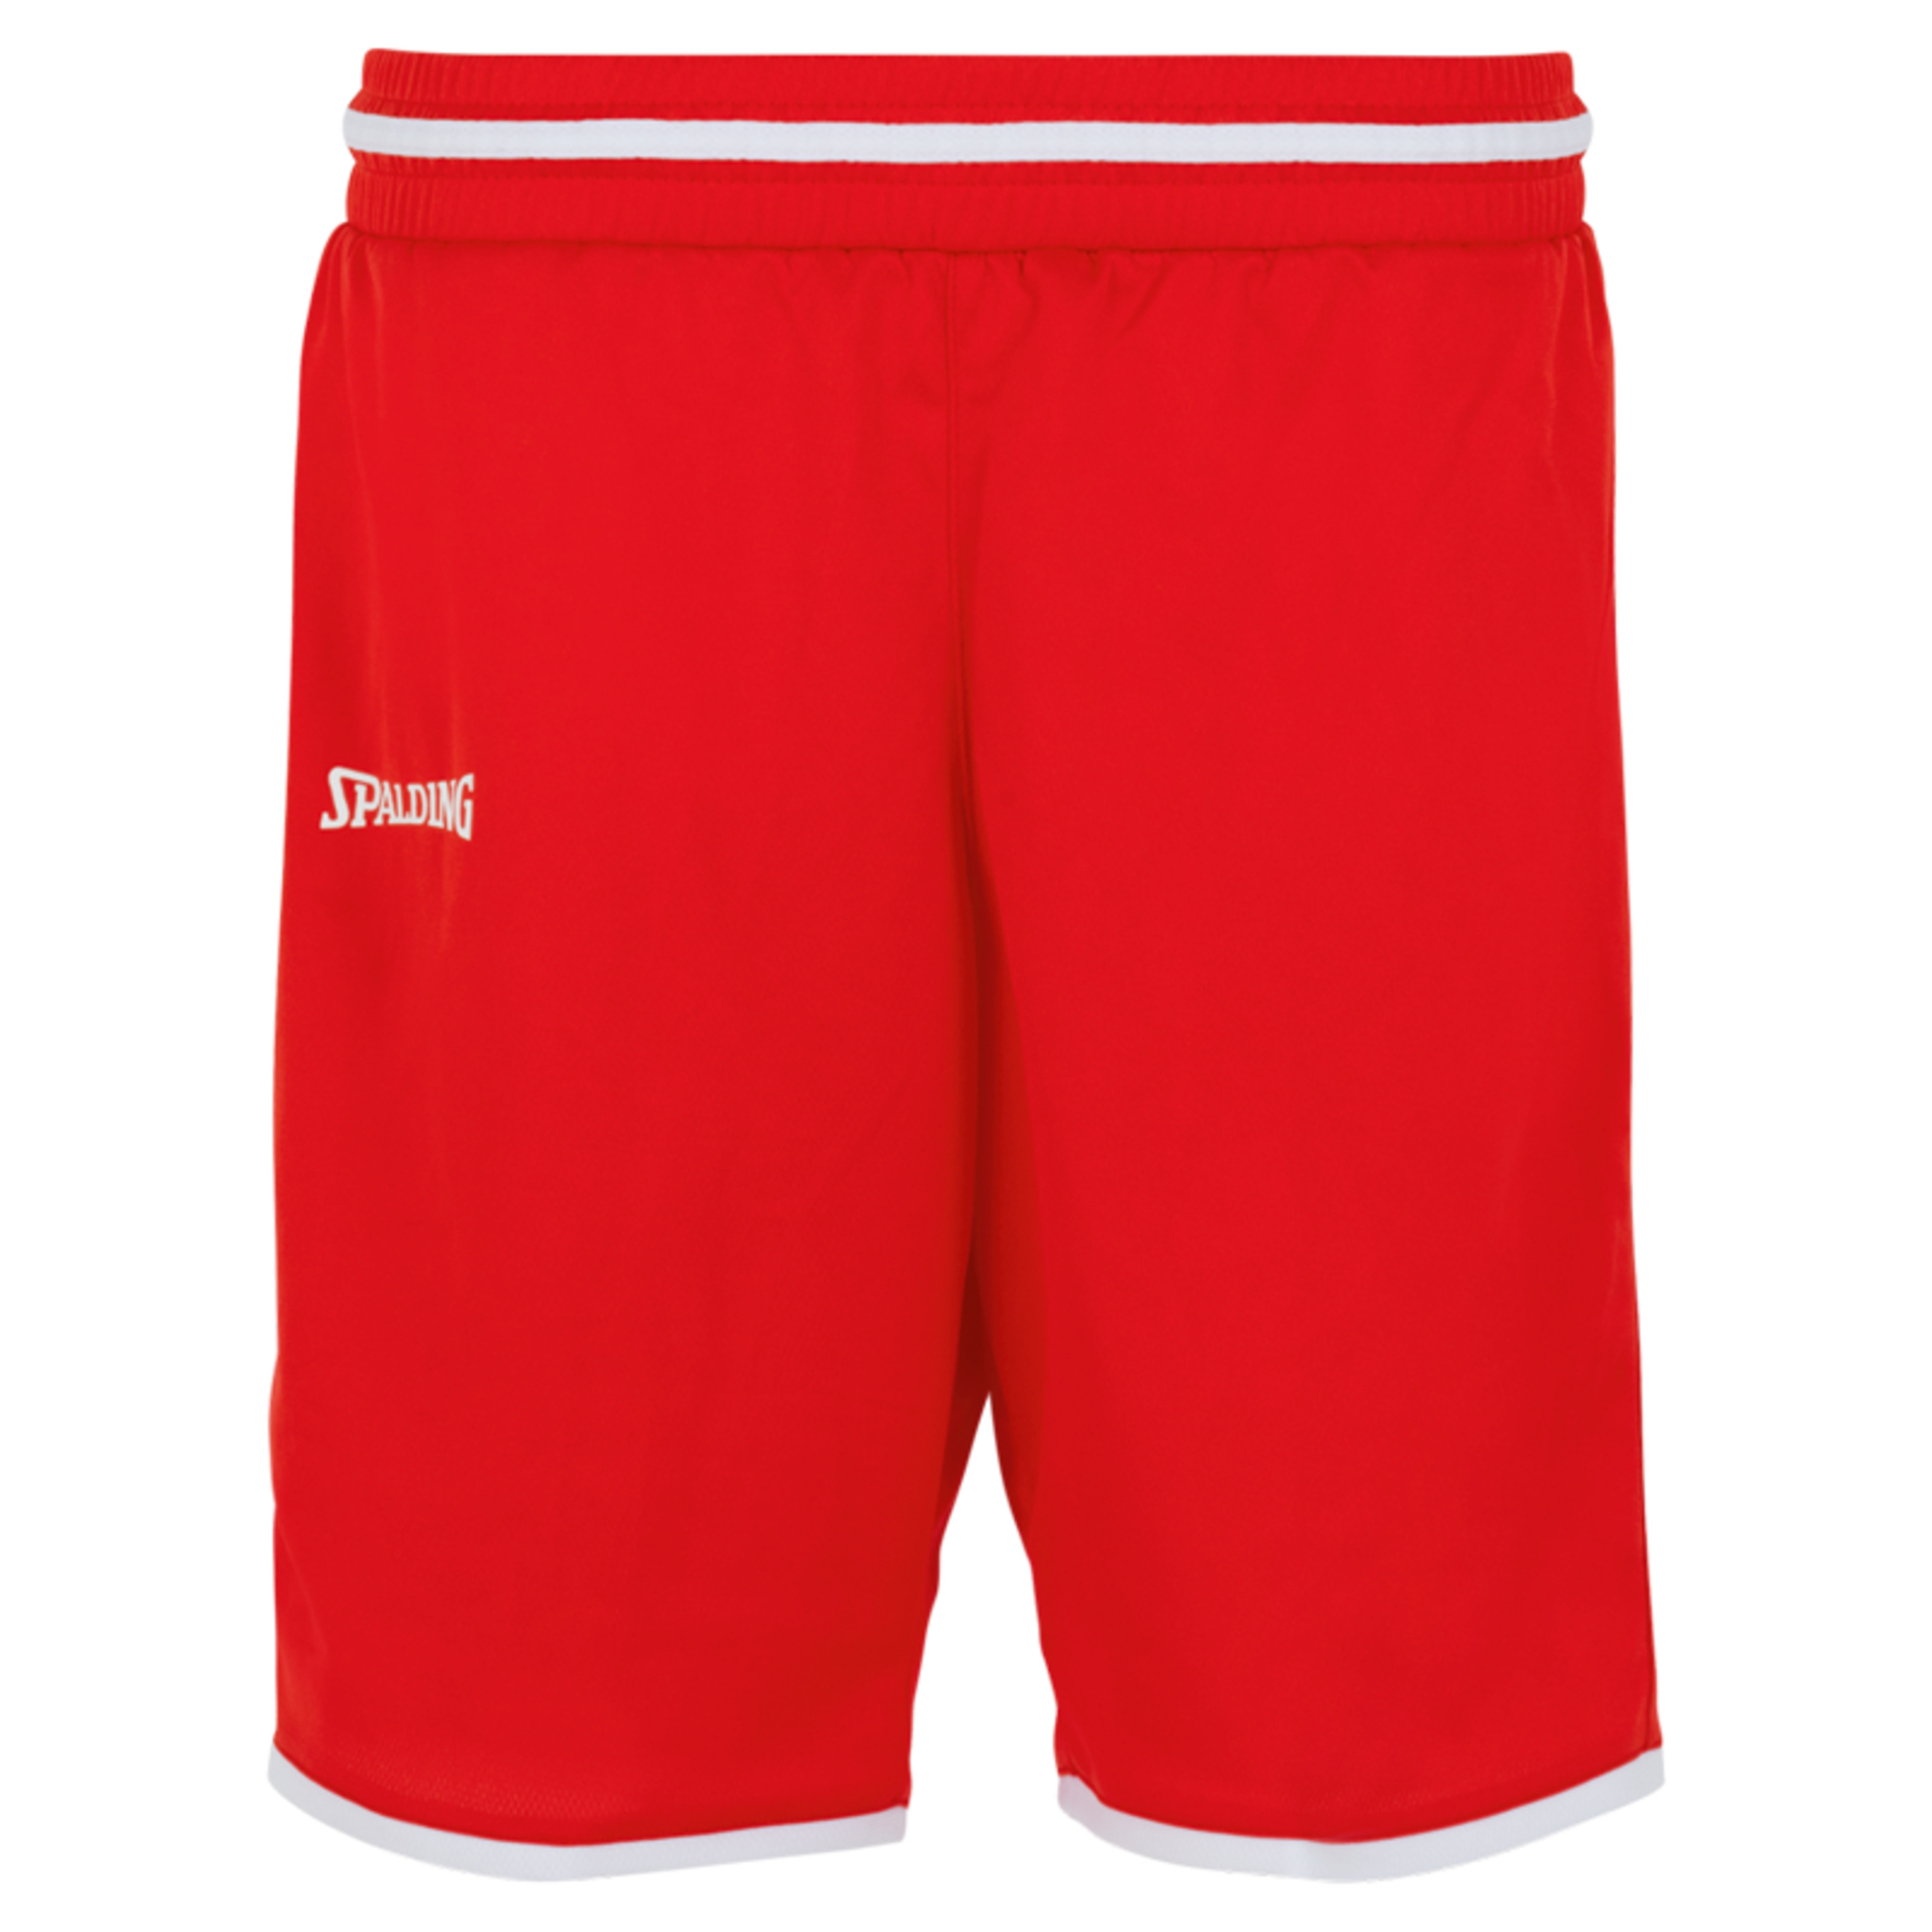 Move Shorts Women Rojo/blanco Spalding